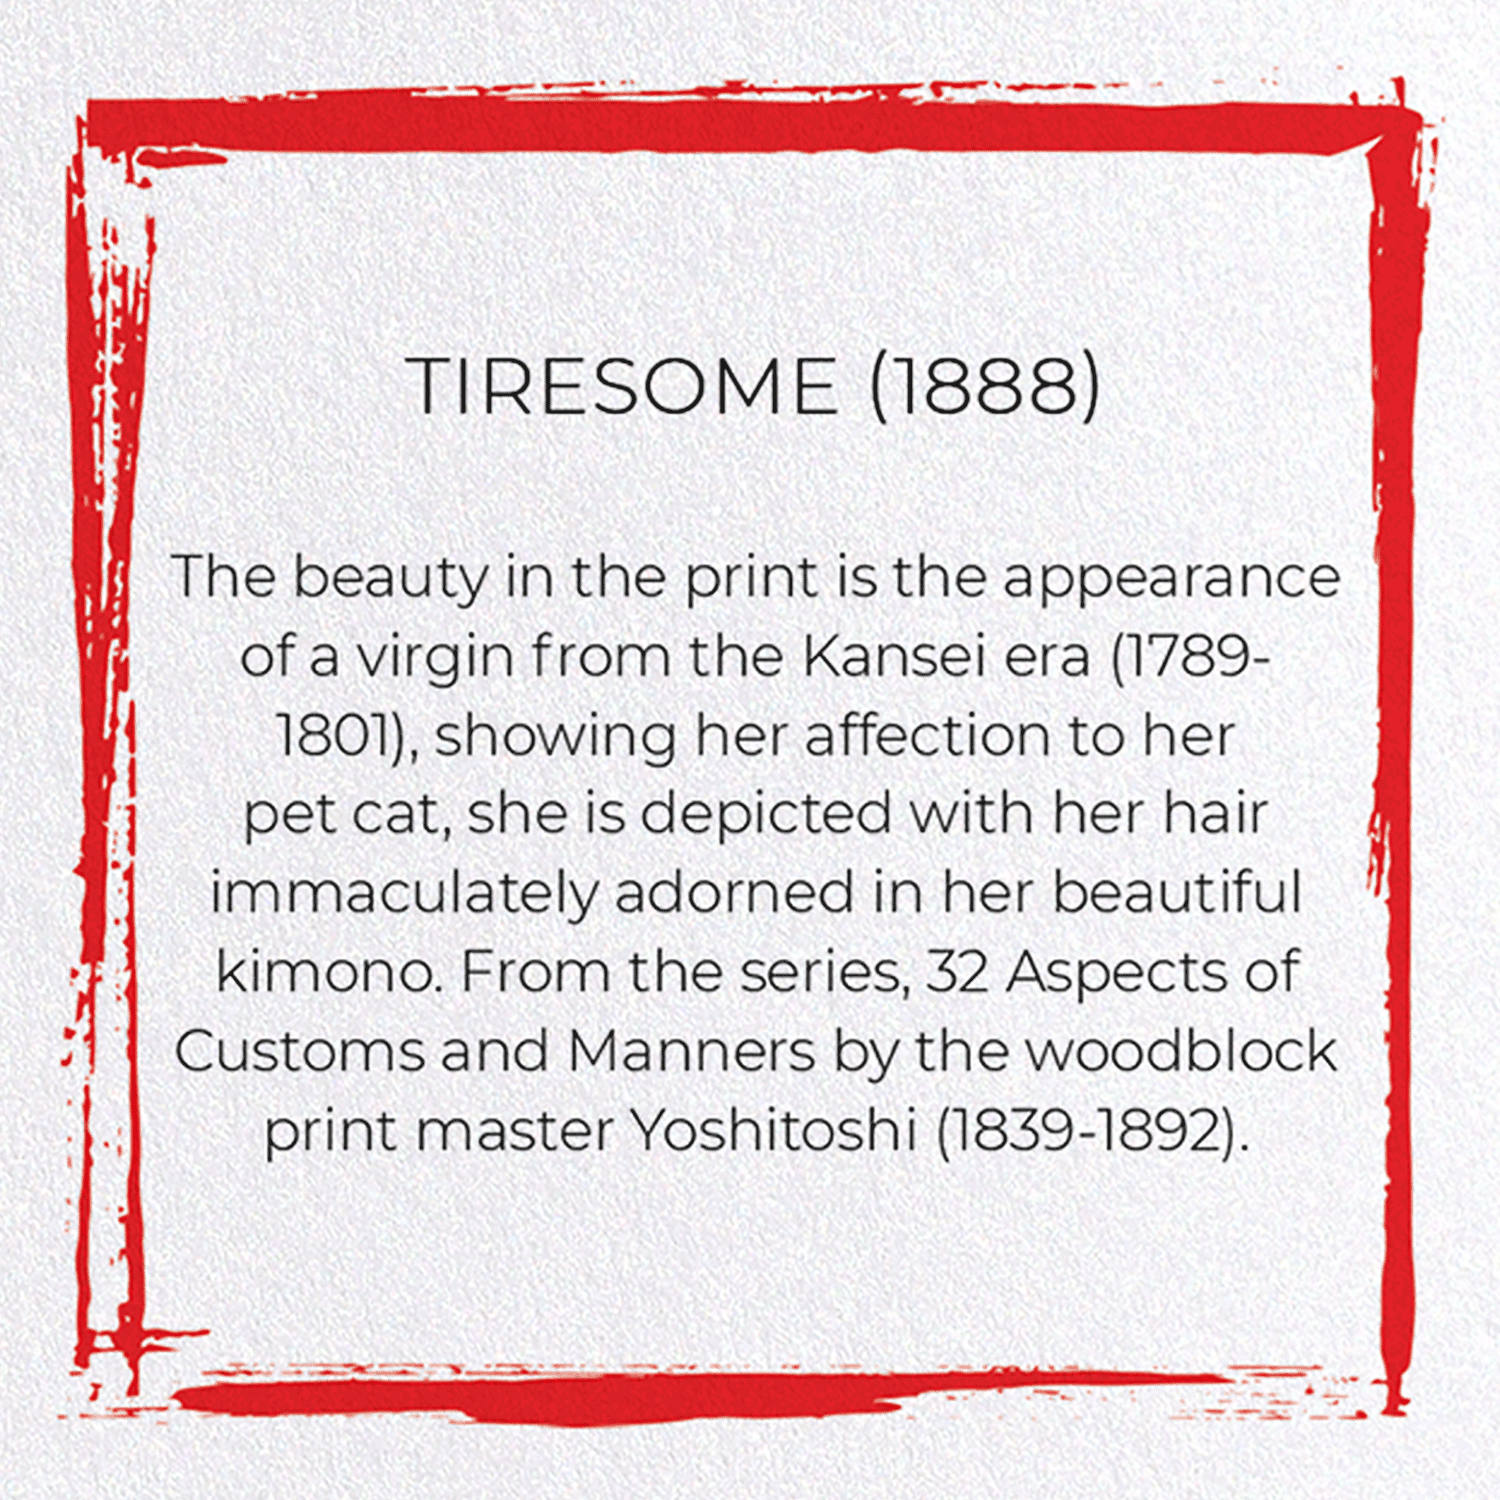 TIRESOME (1888)